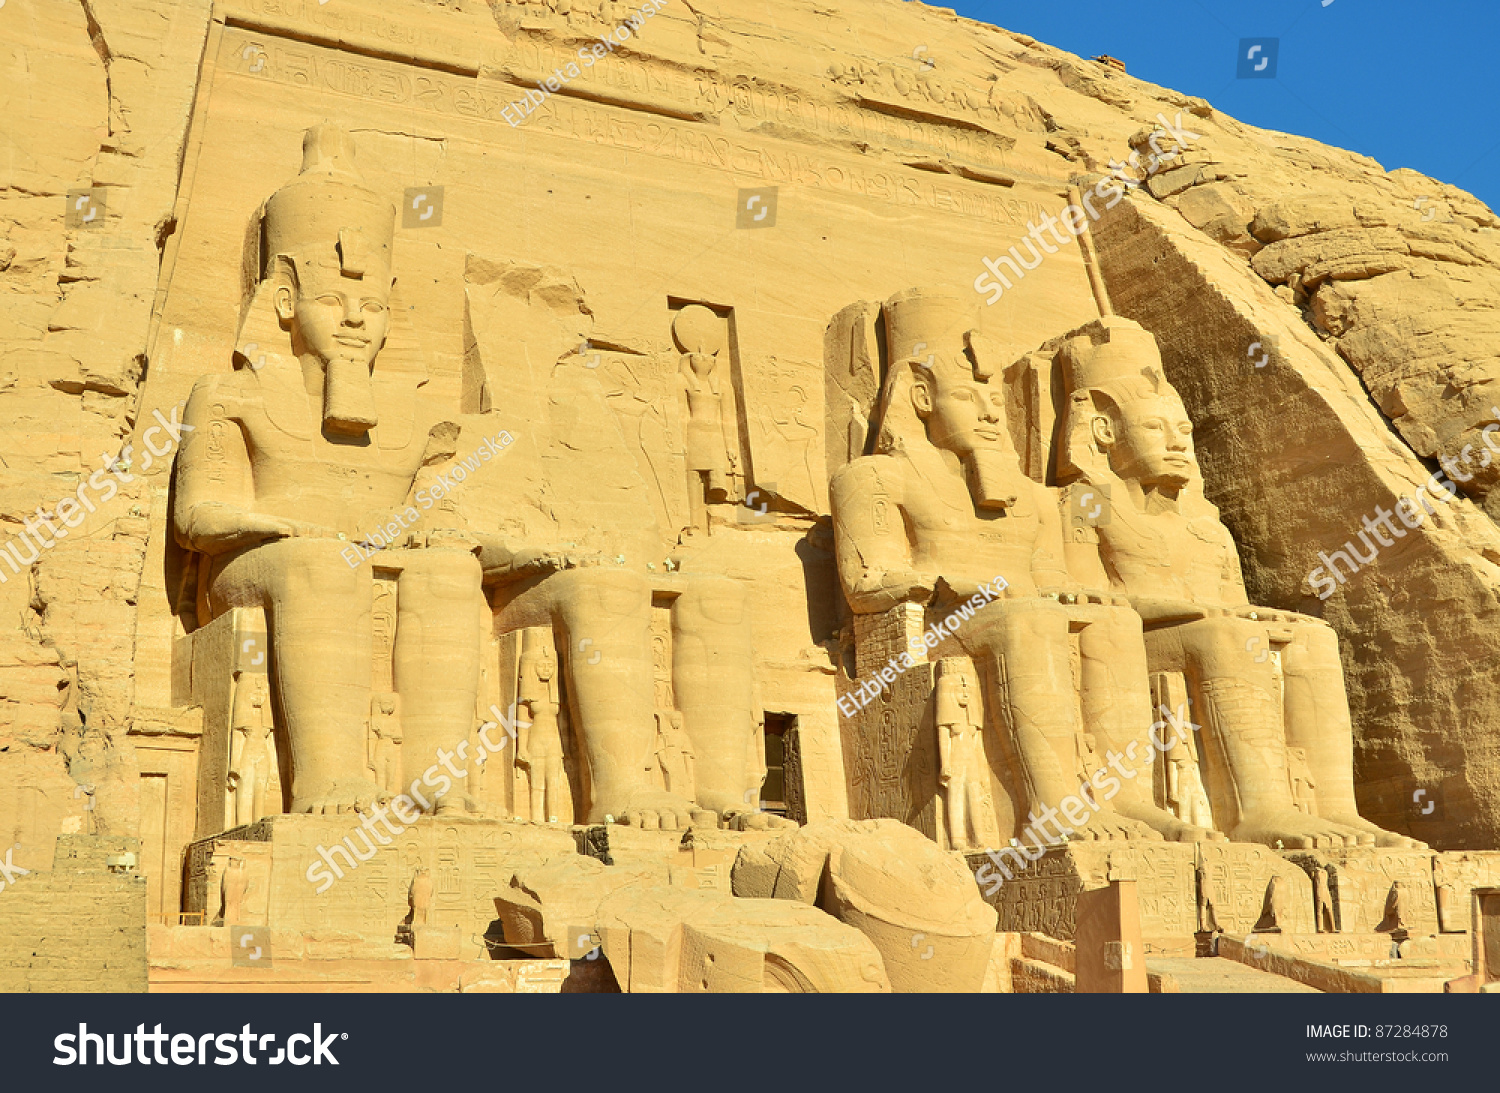 Abu Simbel temple, Egypt #87284878